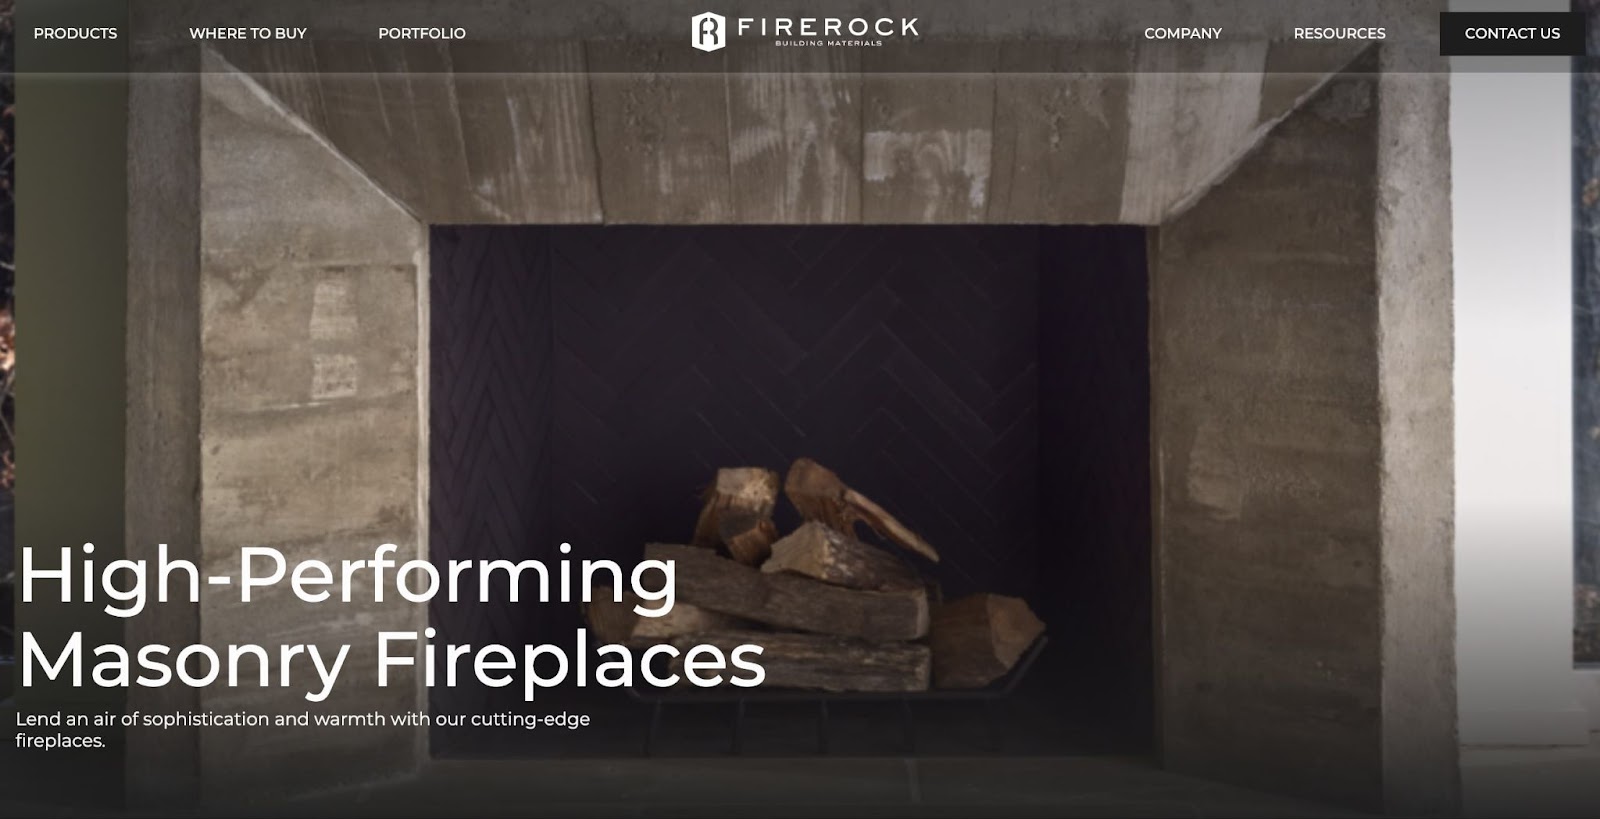 Firerock homepage